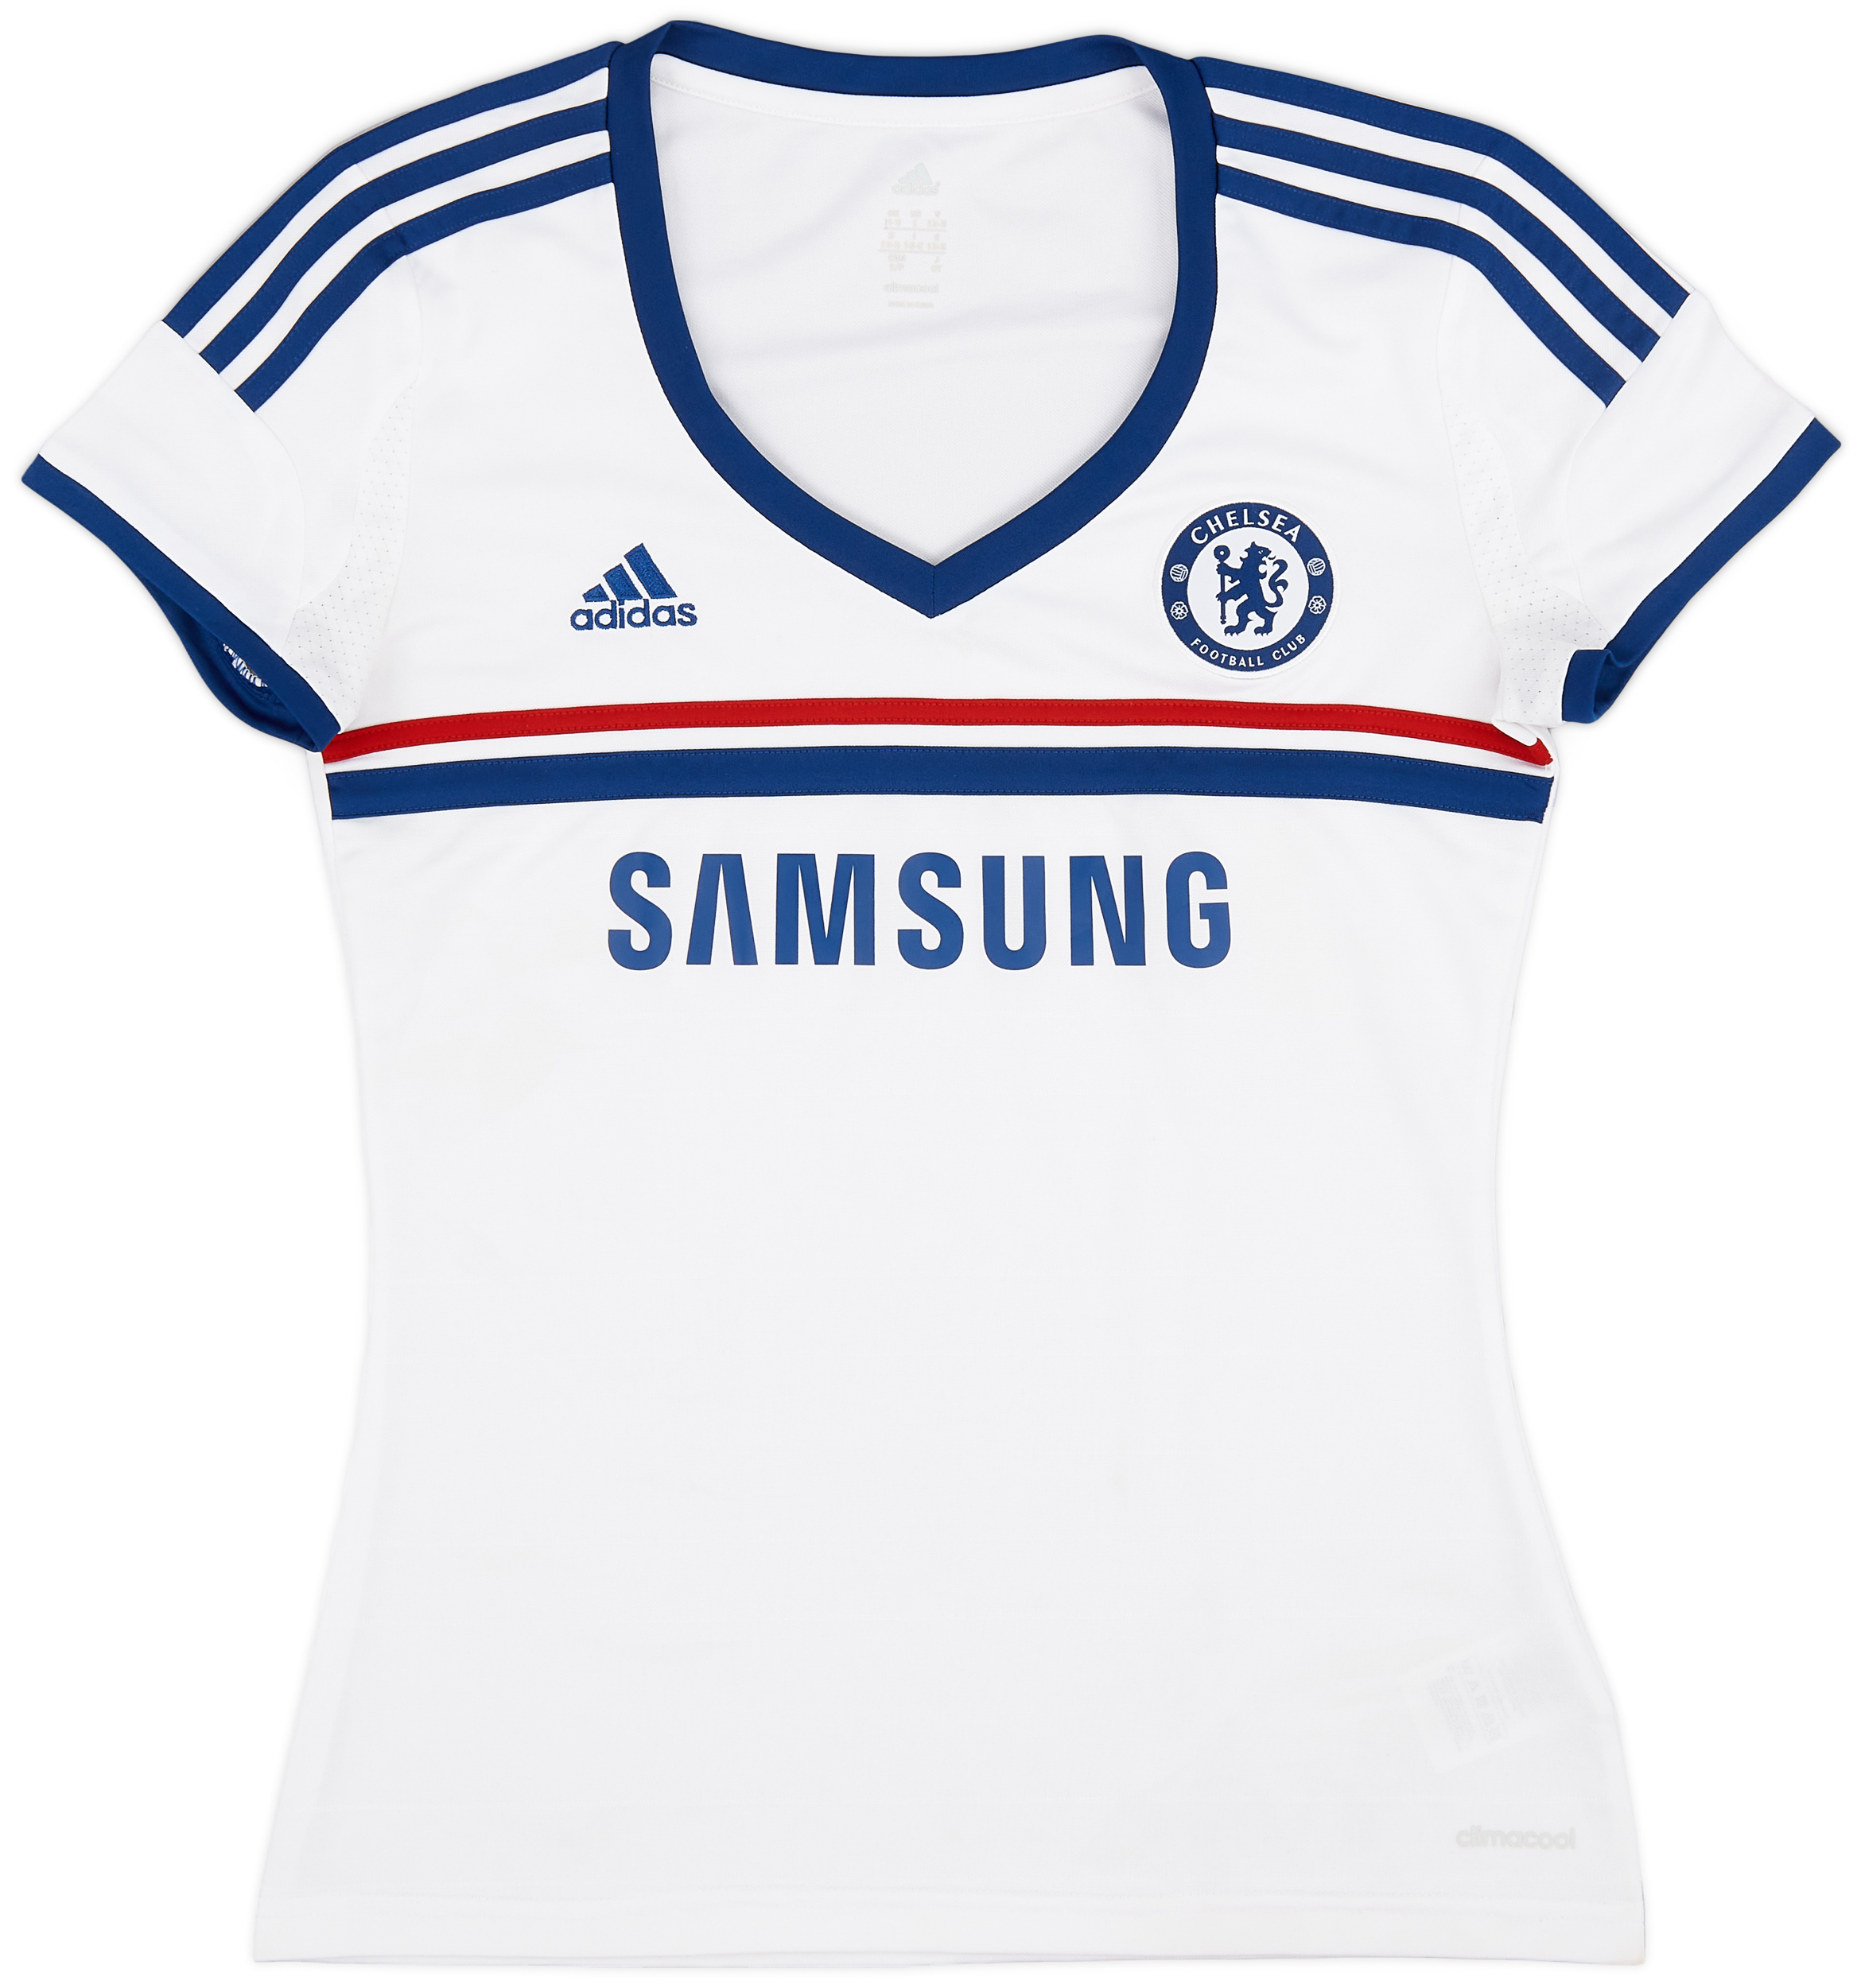 2013-14 Chelsea Away Shirt - 9/10 - Women's ()